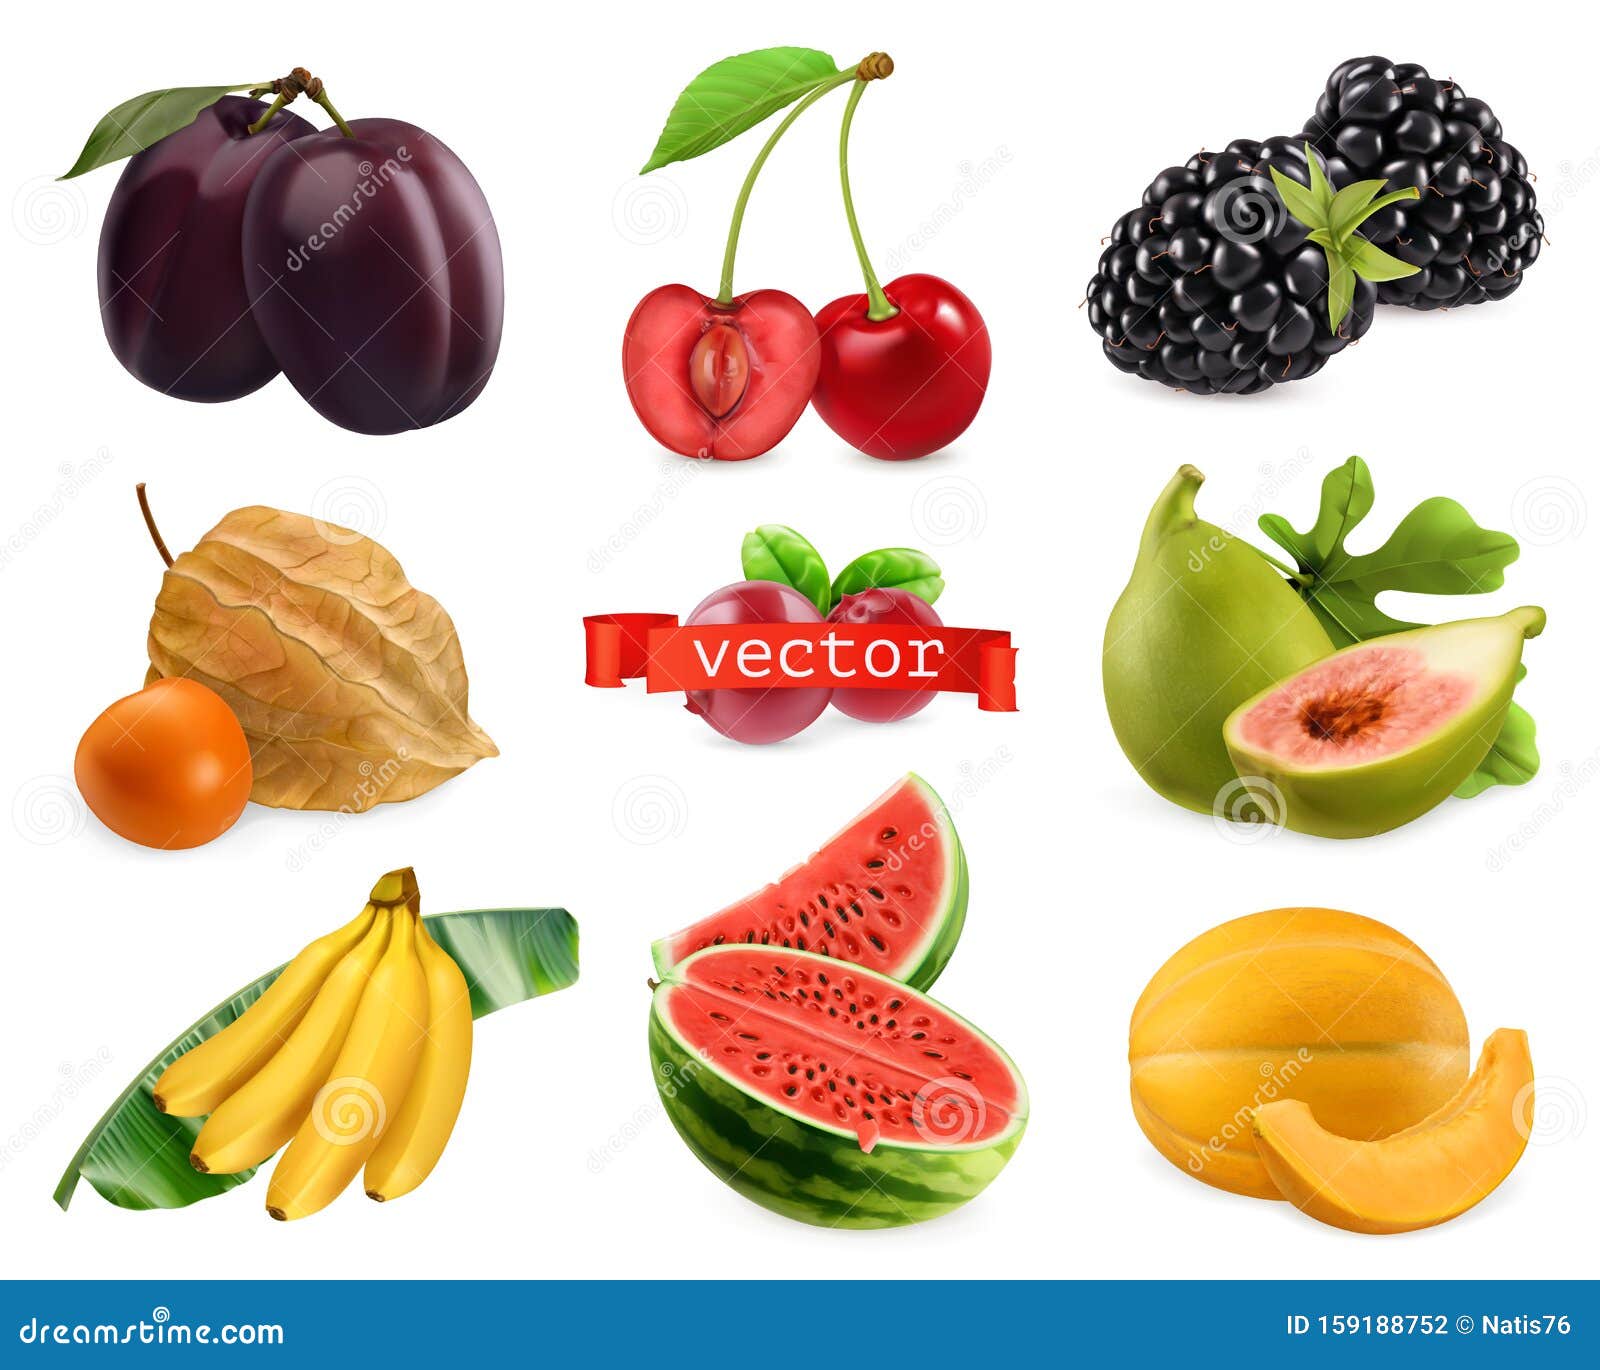 fresh fruits and berries. plum, cherry, blackberry, physalis, figs, banana, watermelon, melon. 3d realistic  set